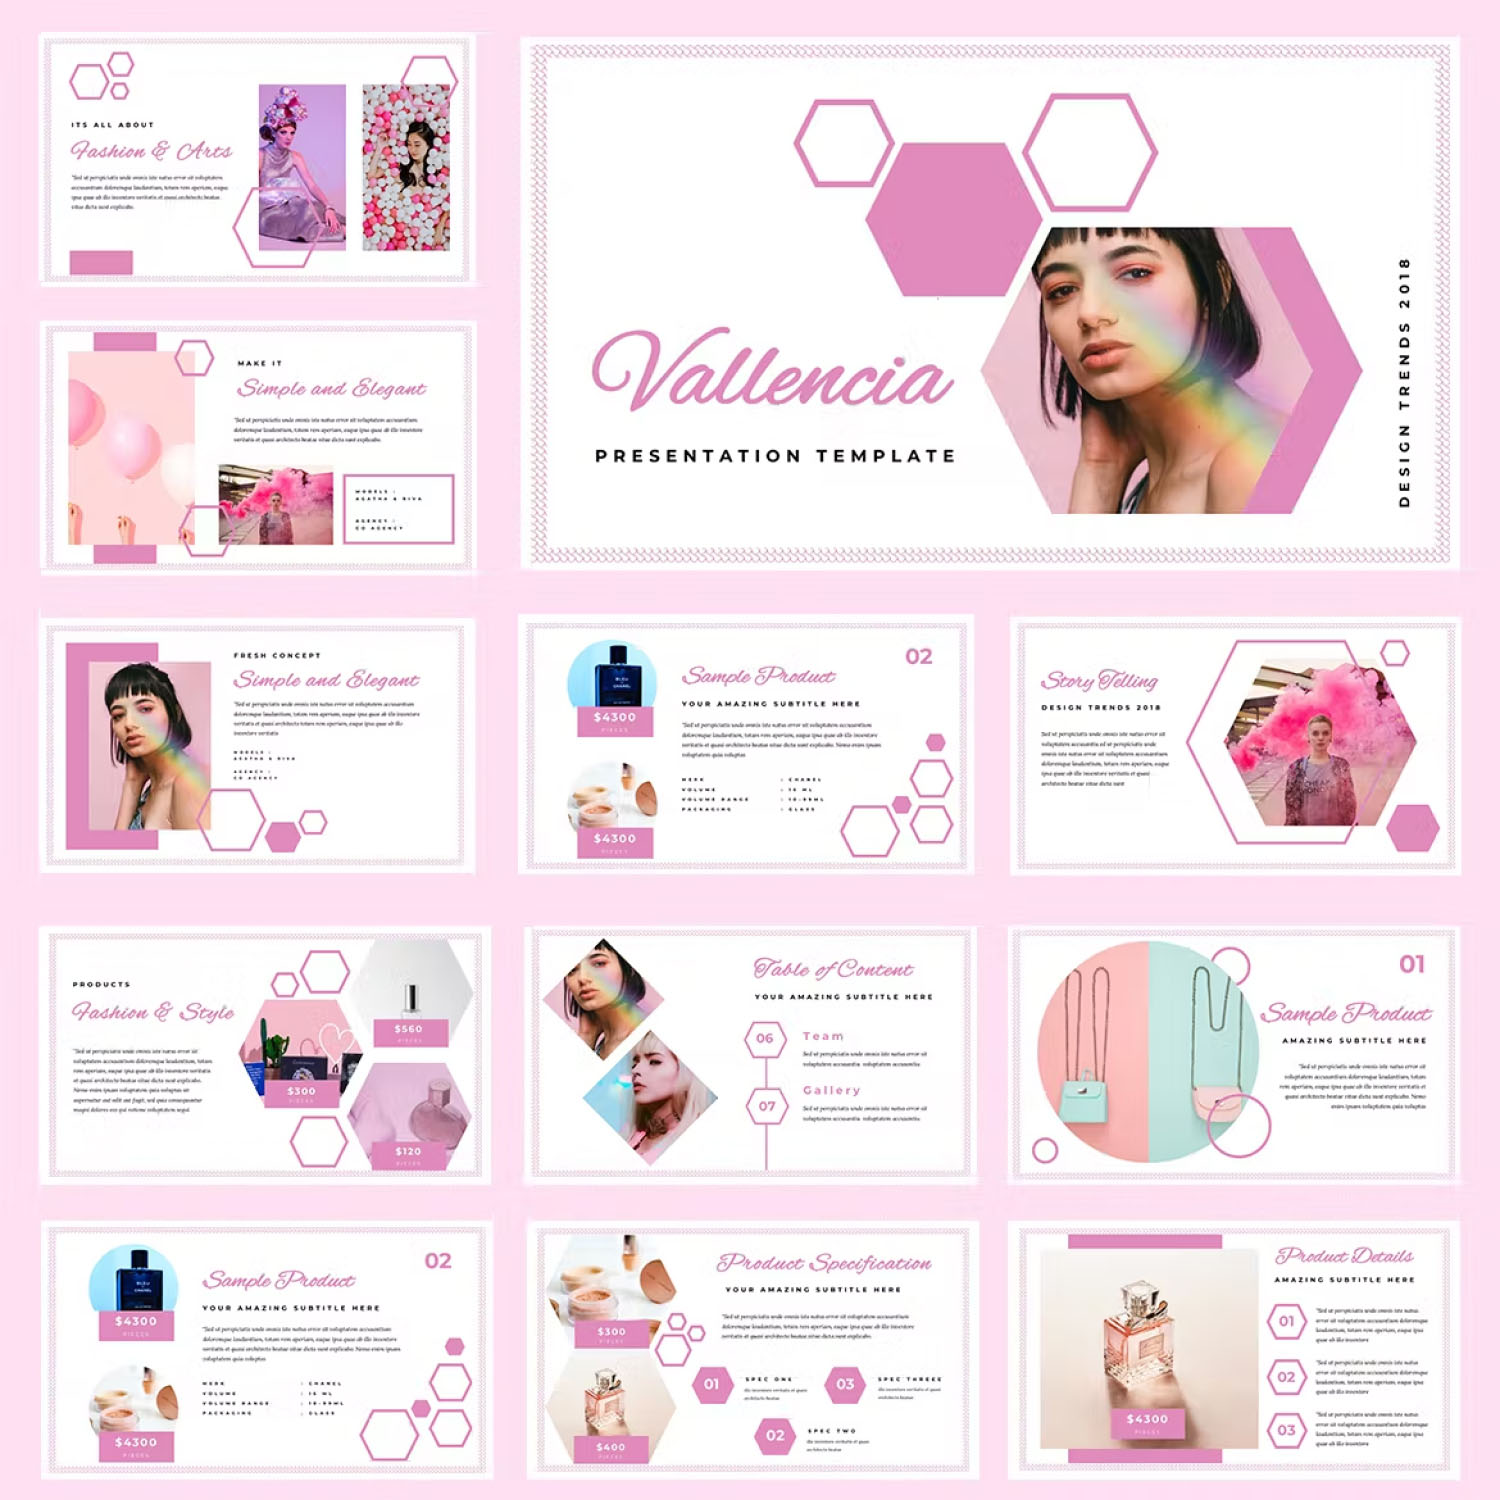 Vallencia Marketing Fashion Powerpoint Presentation cover.